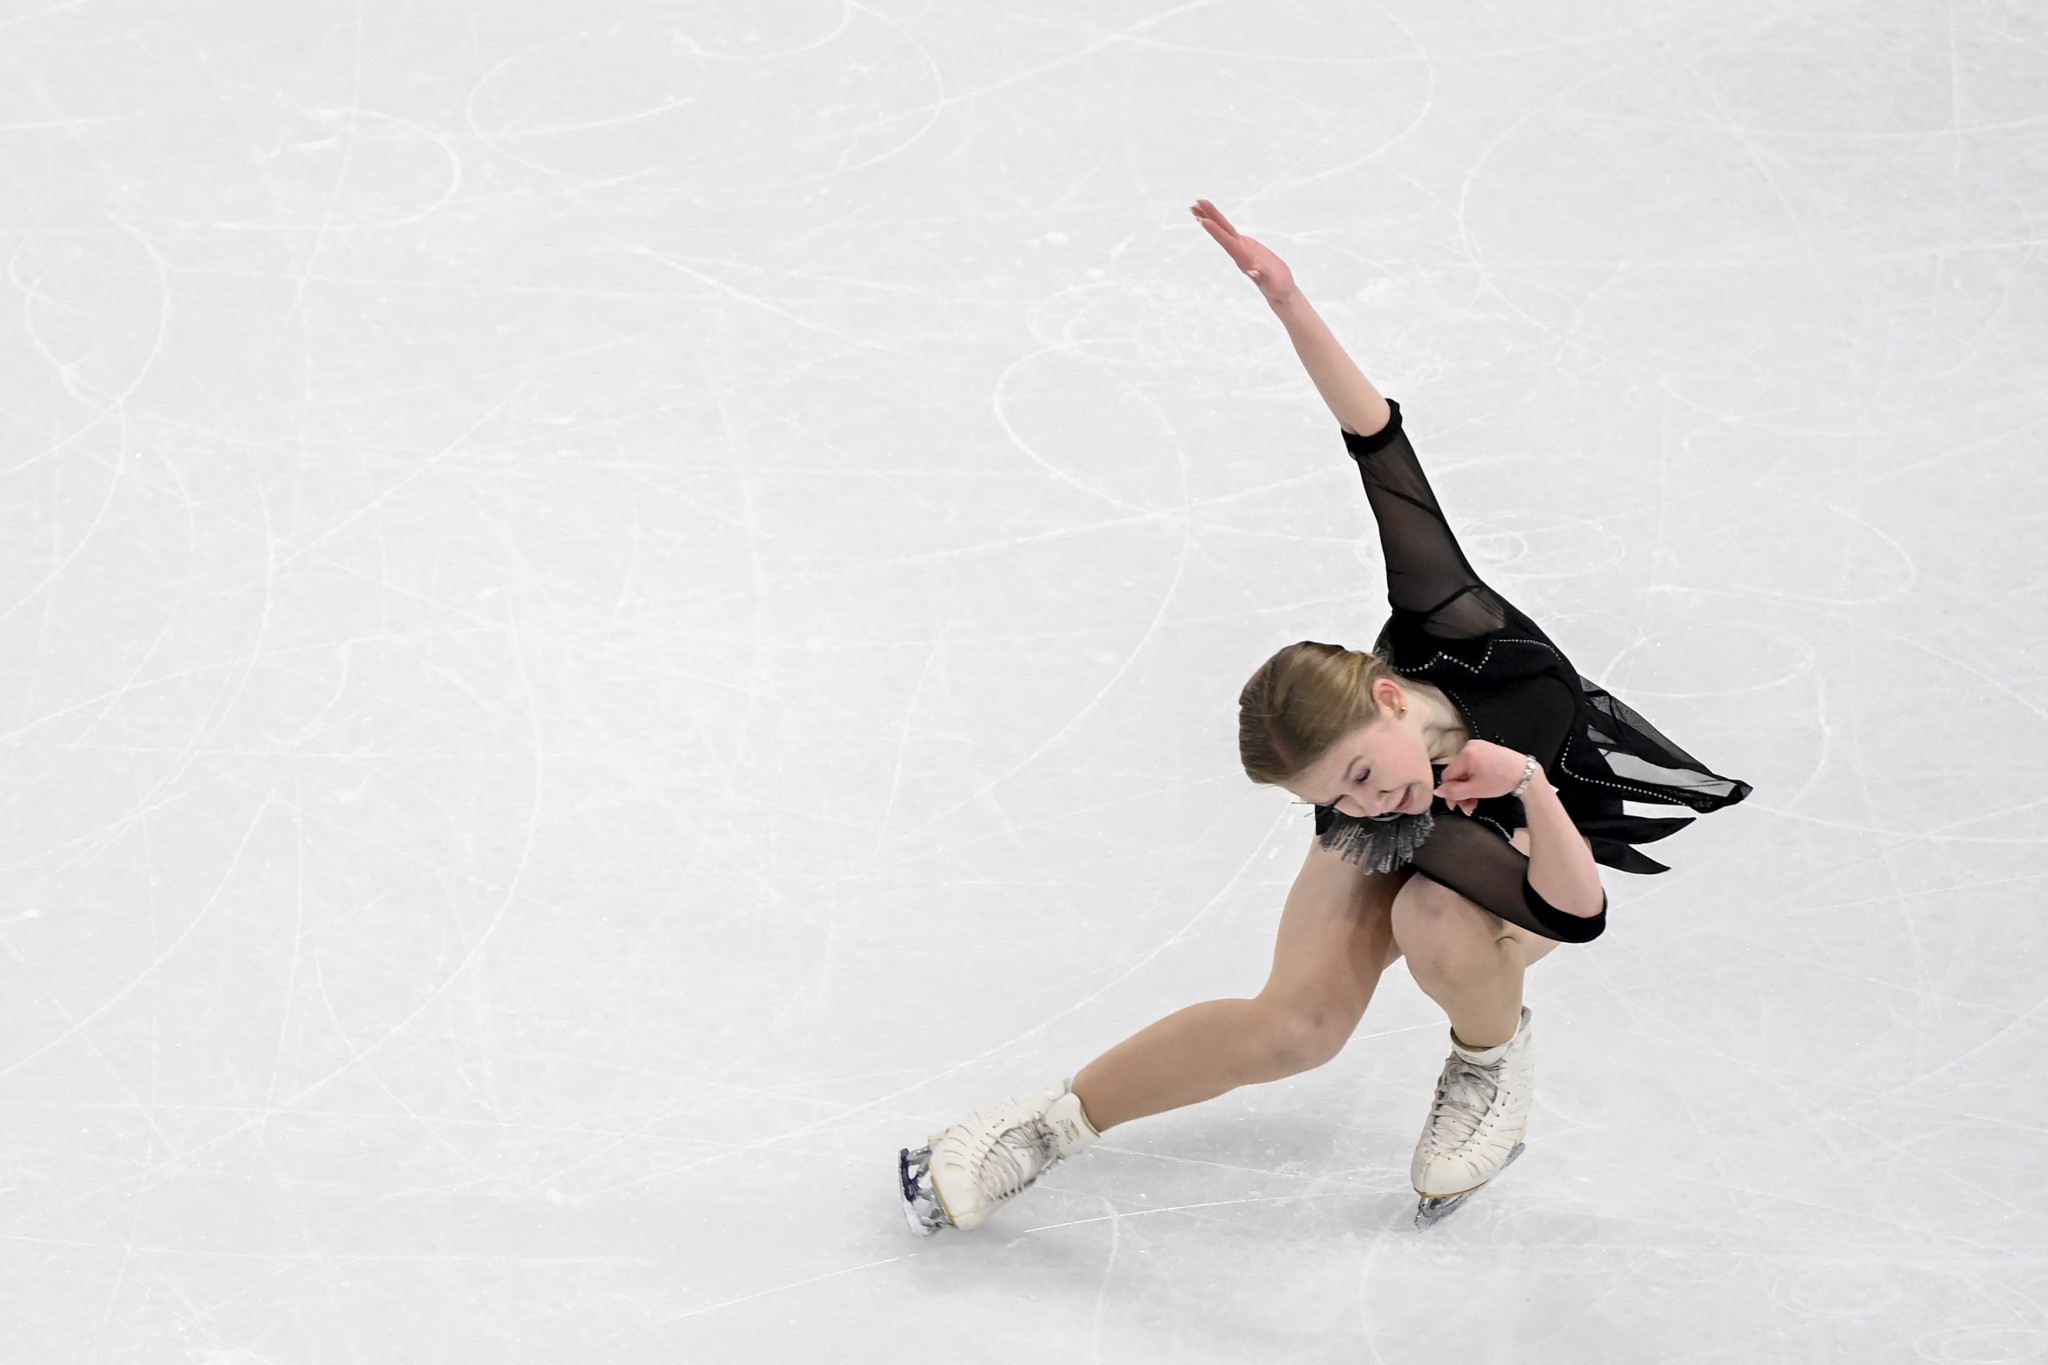 Ekaterina Kurakova put together an impressive free skating routine to climb to second ©Getty Images